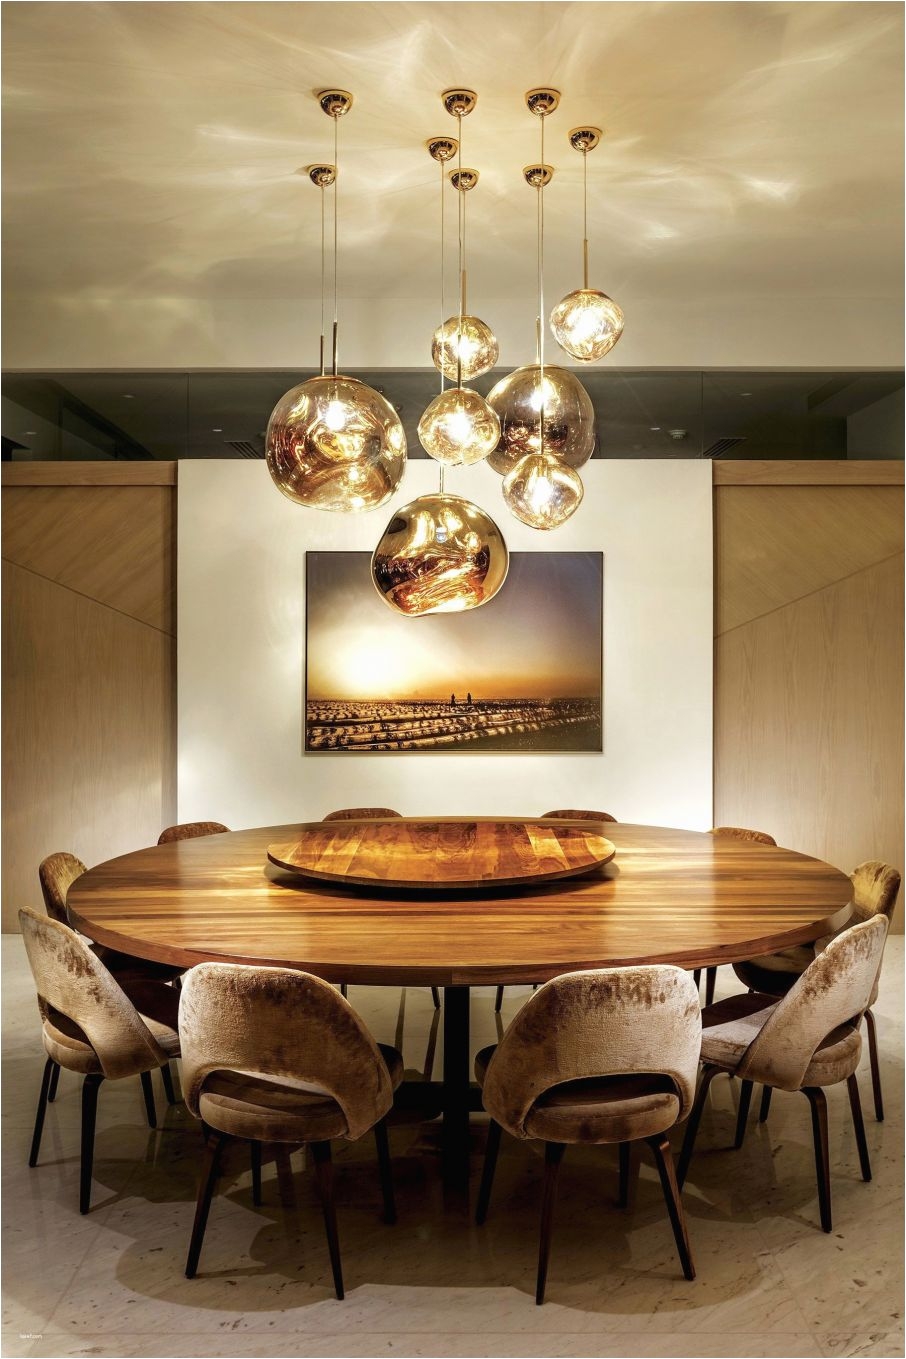 coastal dining room sets for sale inspirational adorable chair mat fresh houzz lighting fixtures lighting 0d